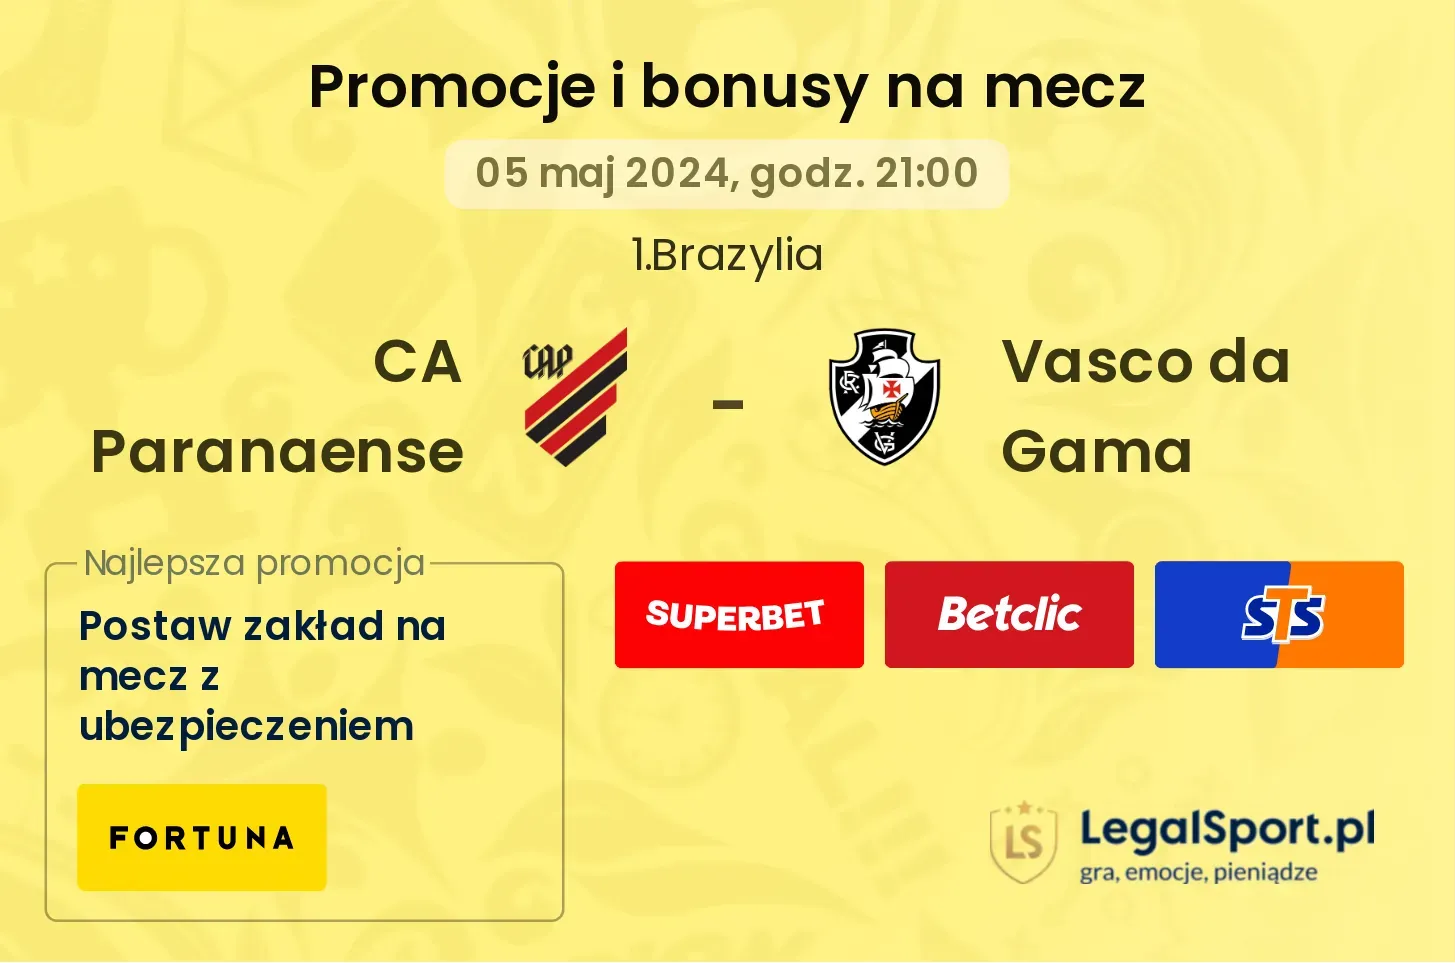 CA Paranaense - Vasco da Gama promocje bonusy na mecz